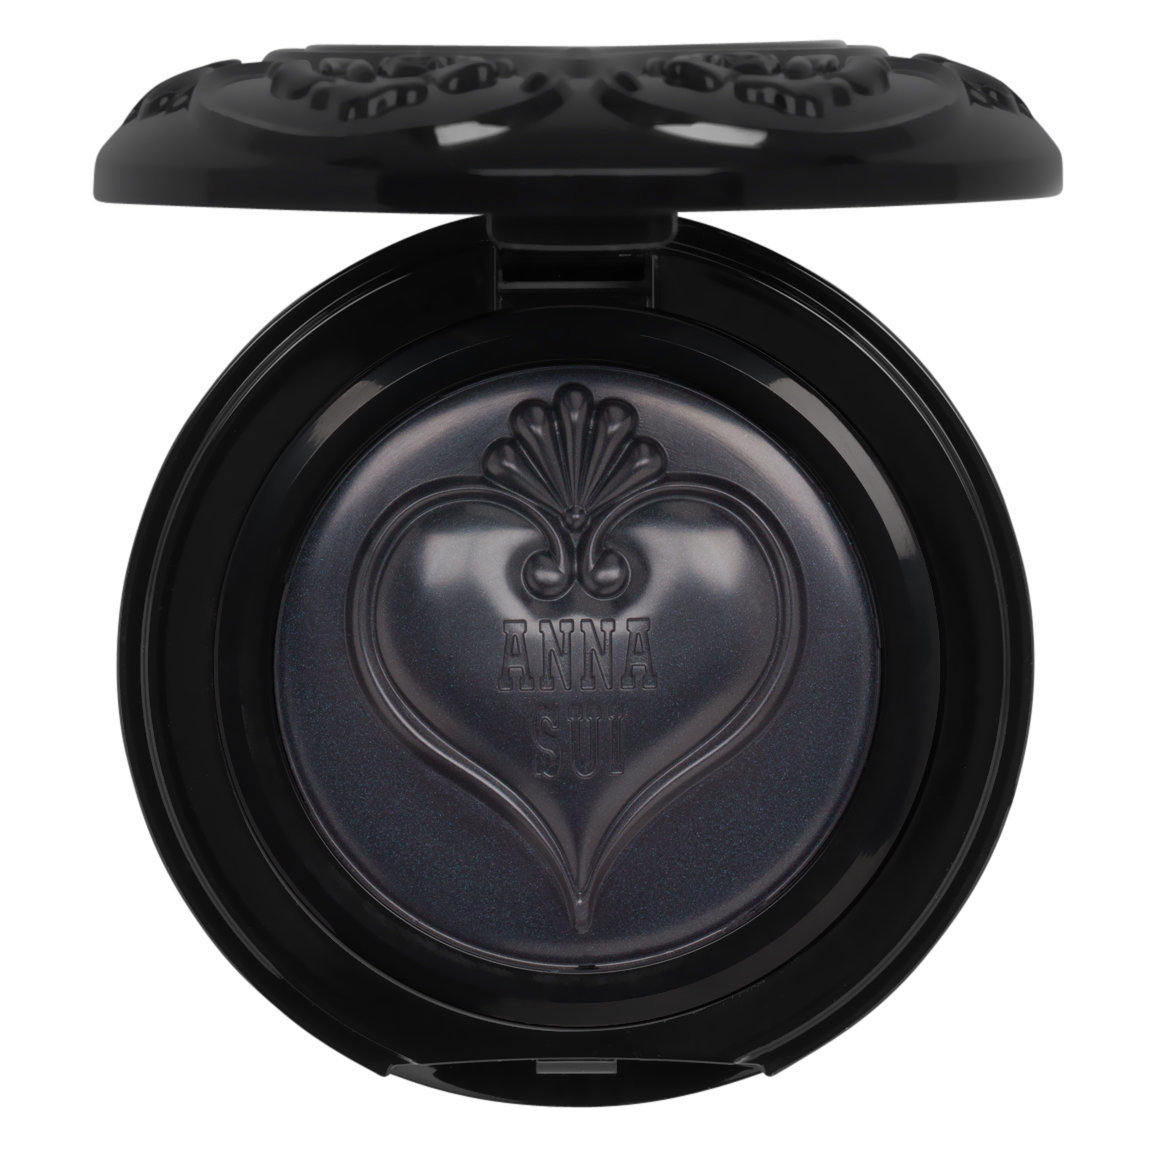 Anna Sui Sui Black Cream Blush alternative view 1 - product swatch.